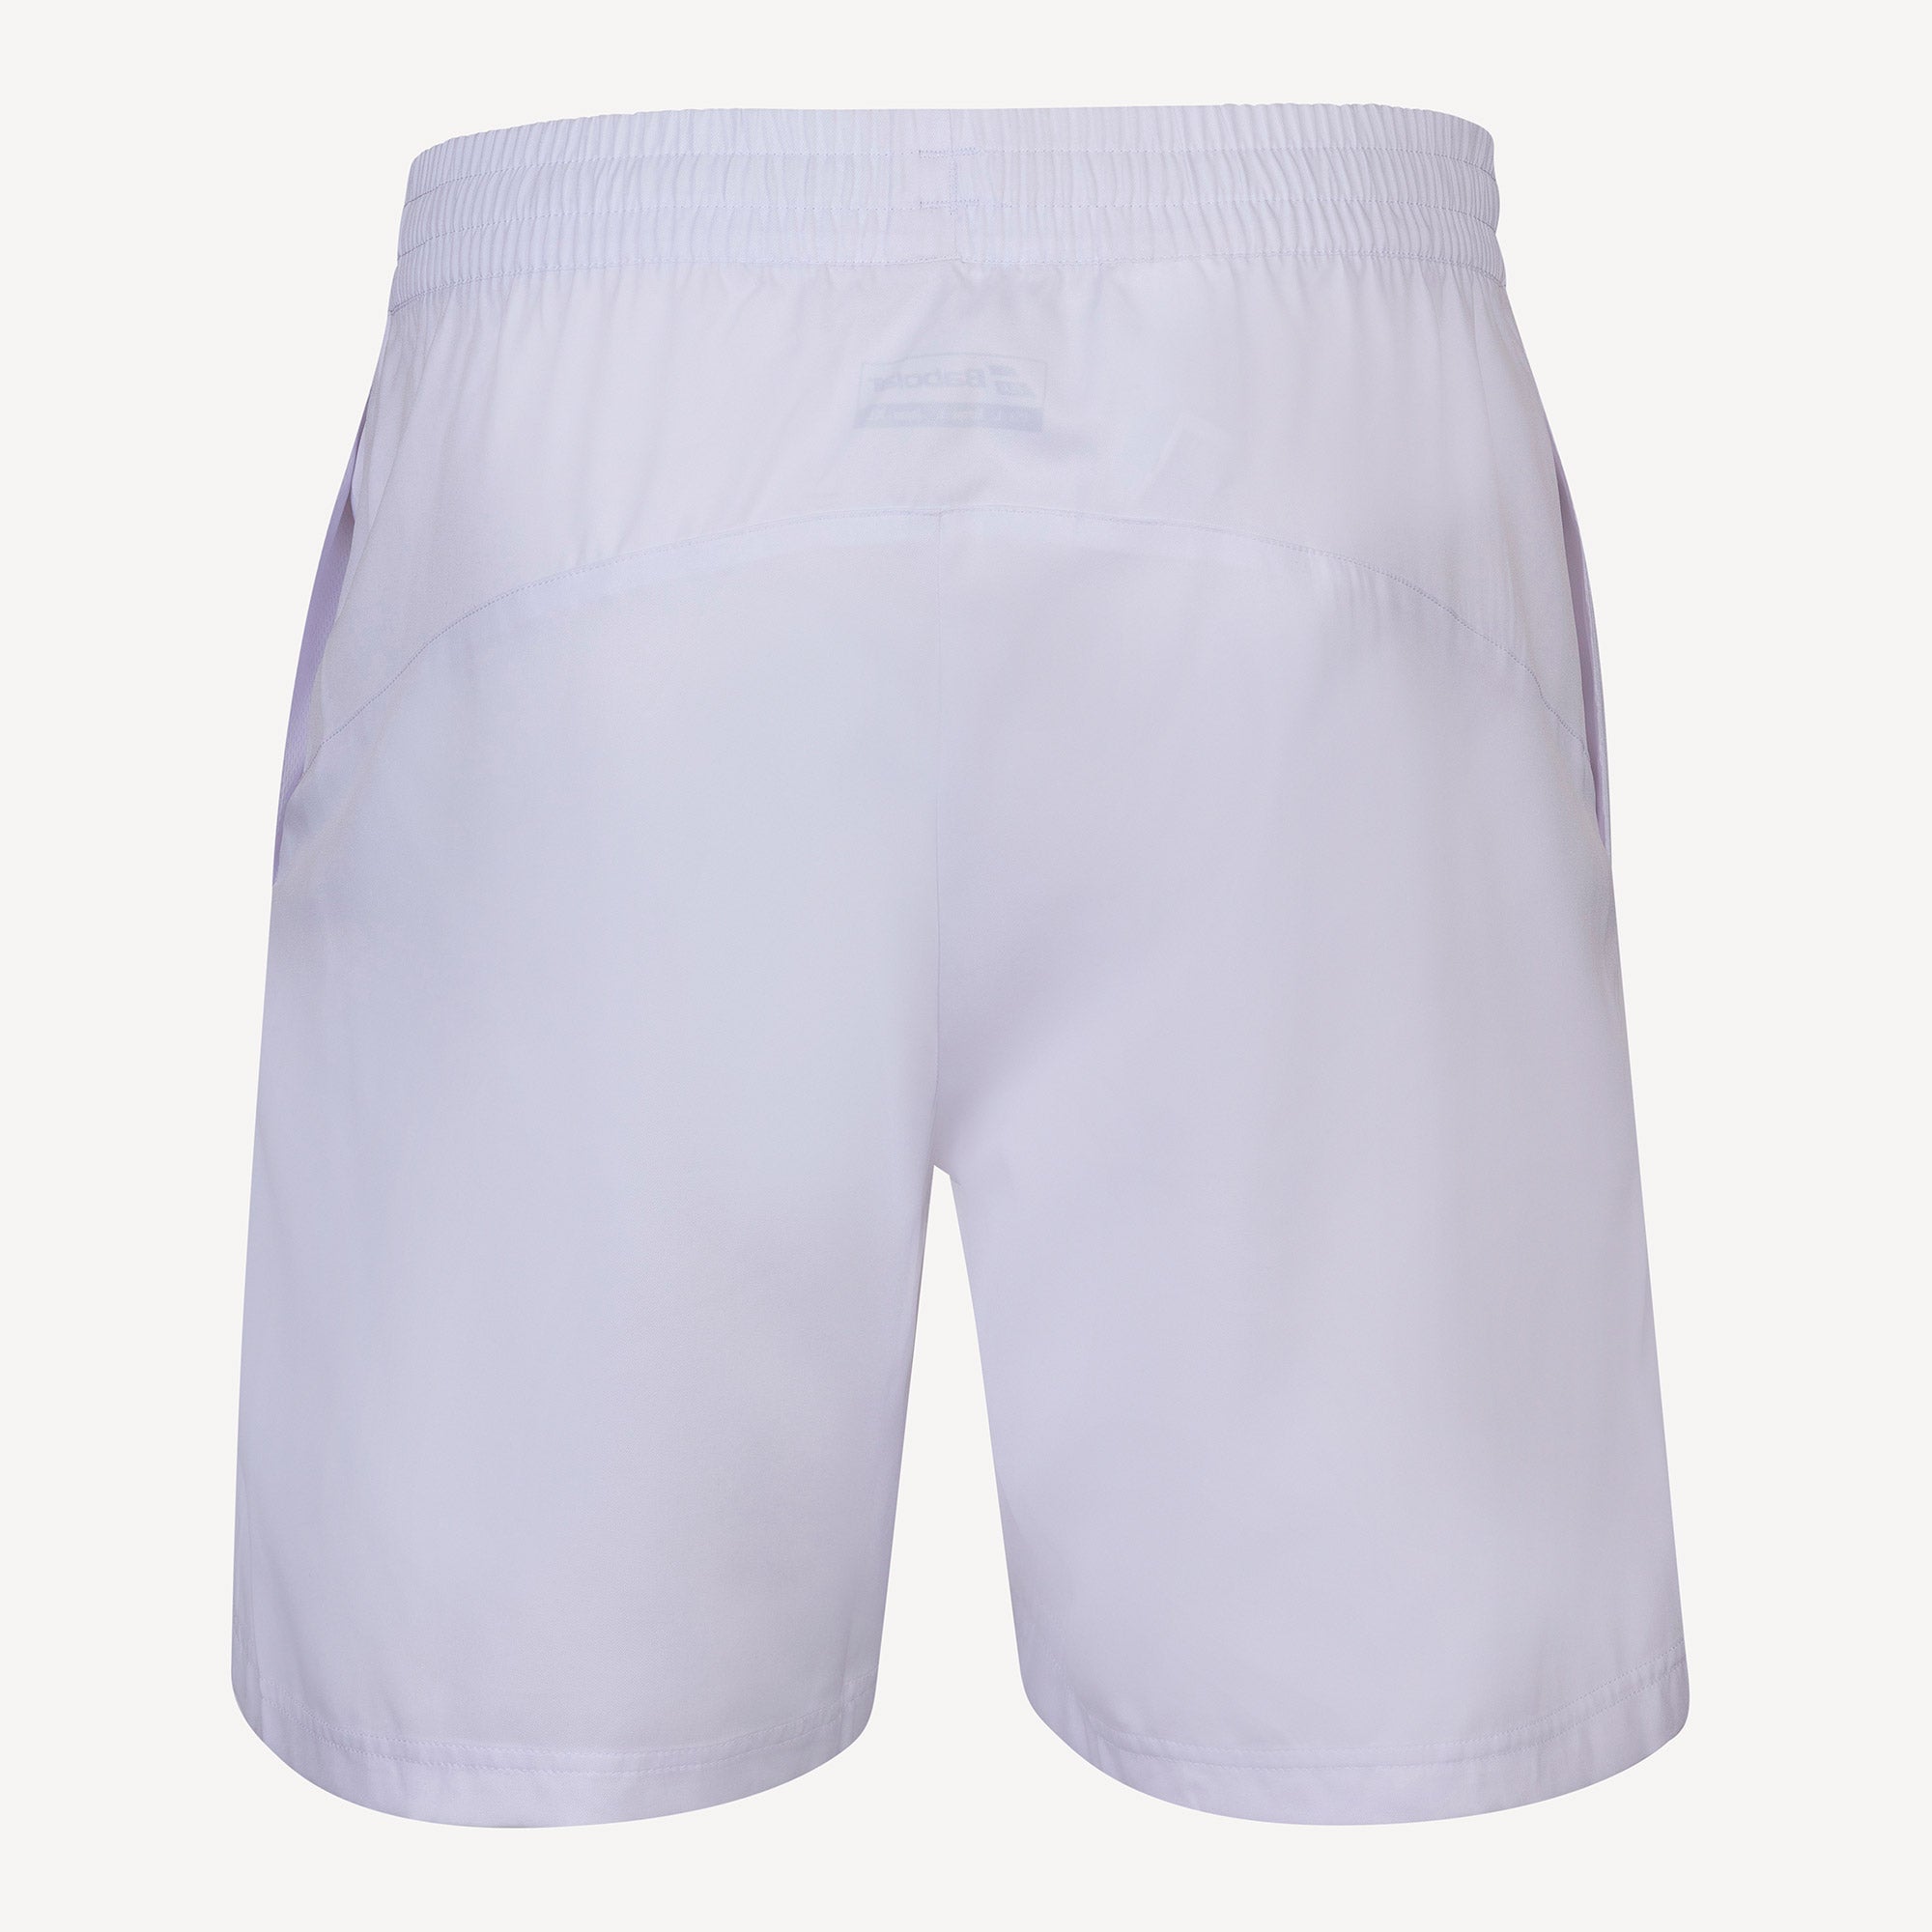 Babolat Play Club Men's Tennis Shorts White (2)